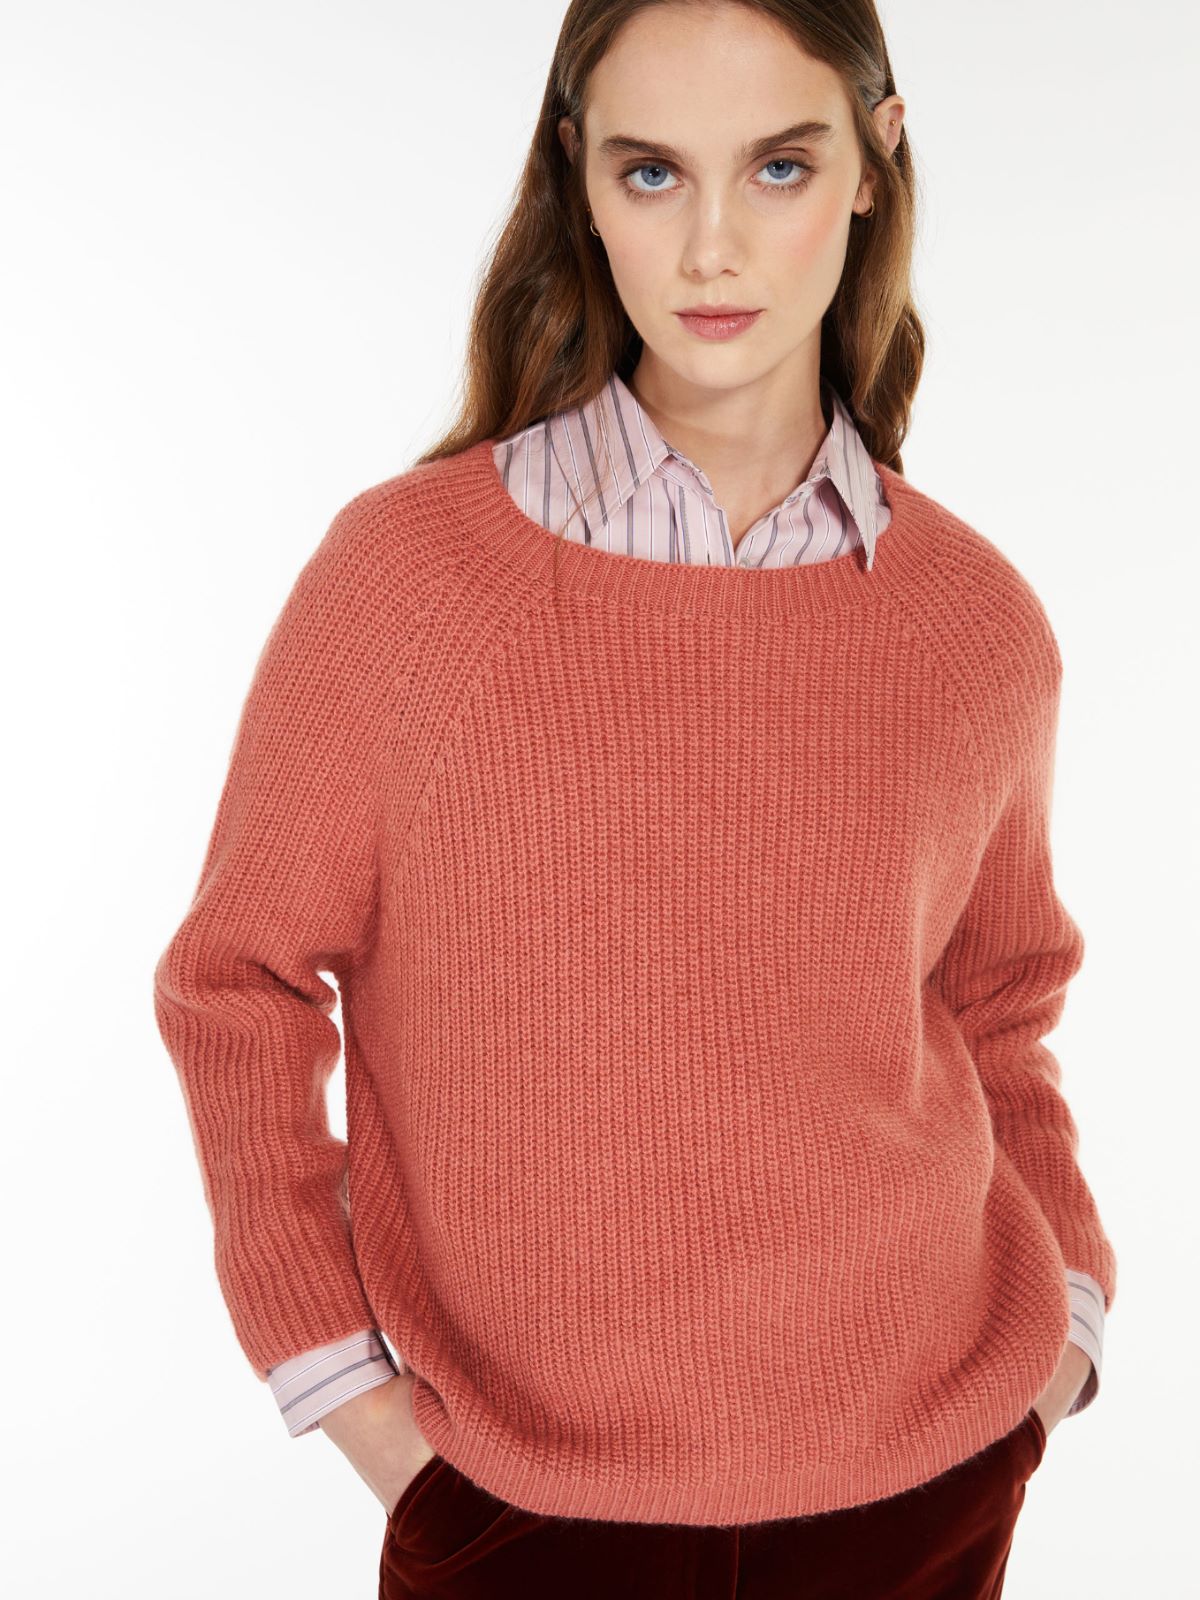 Mohair yarn sweater - ANTIQUE ROSE - Weekend Max Mara - 4